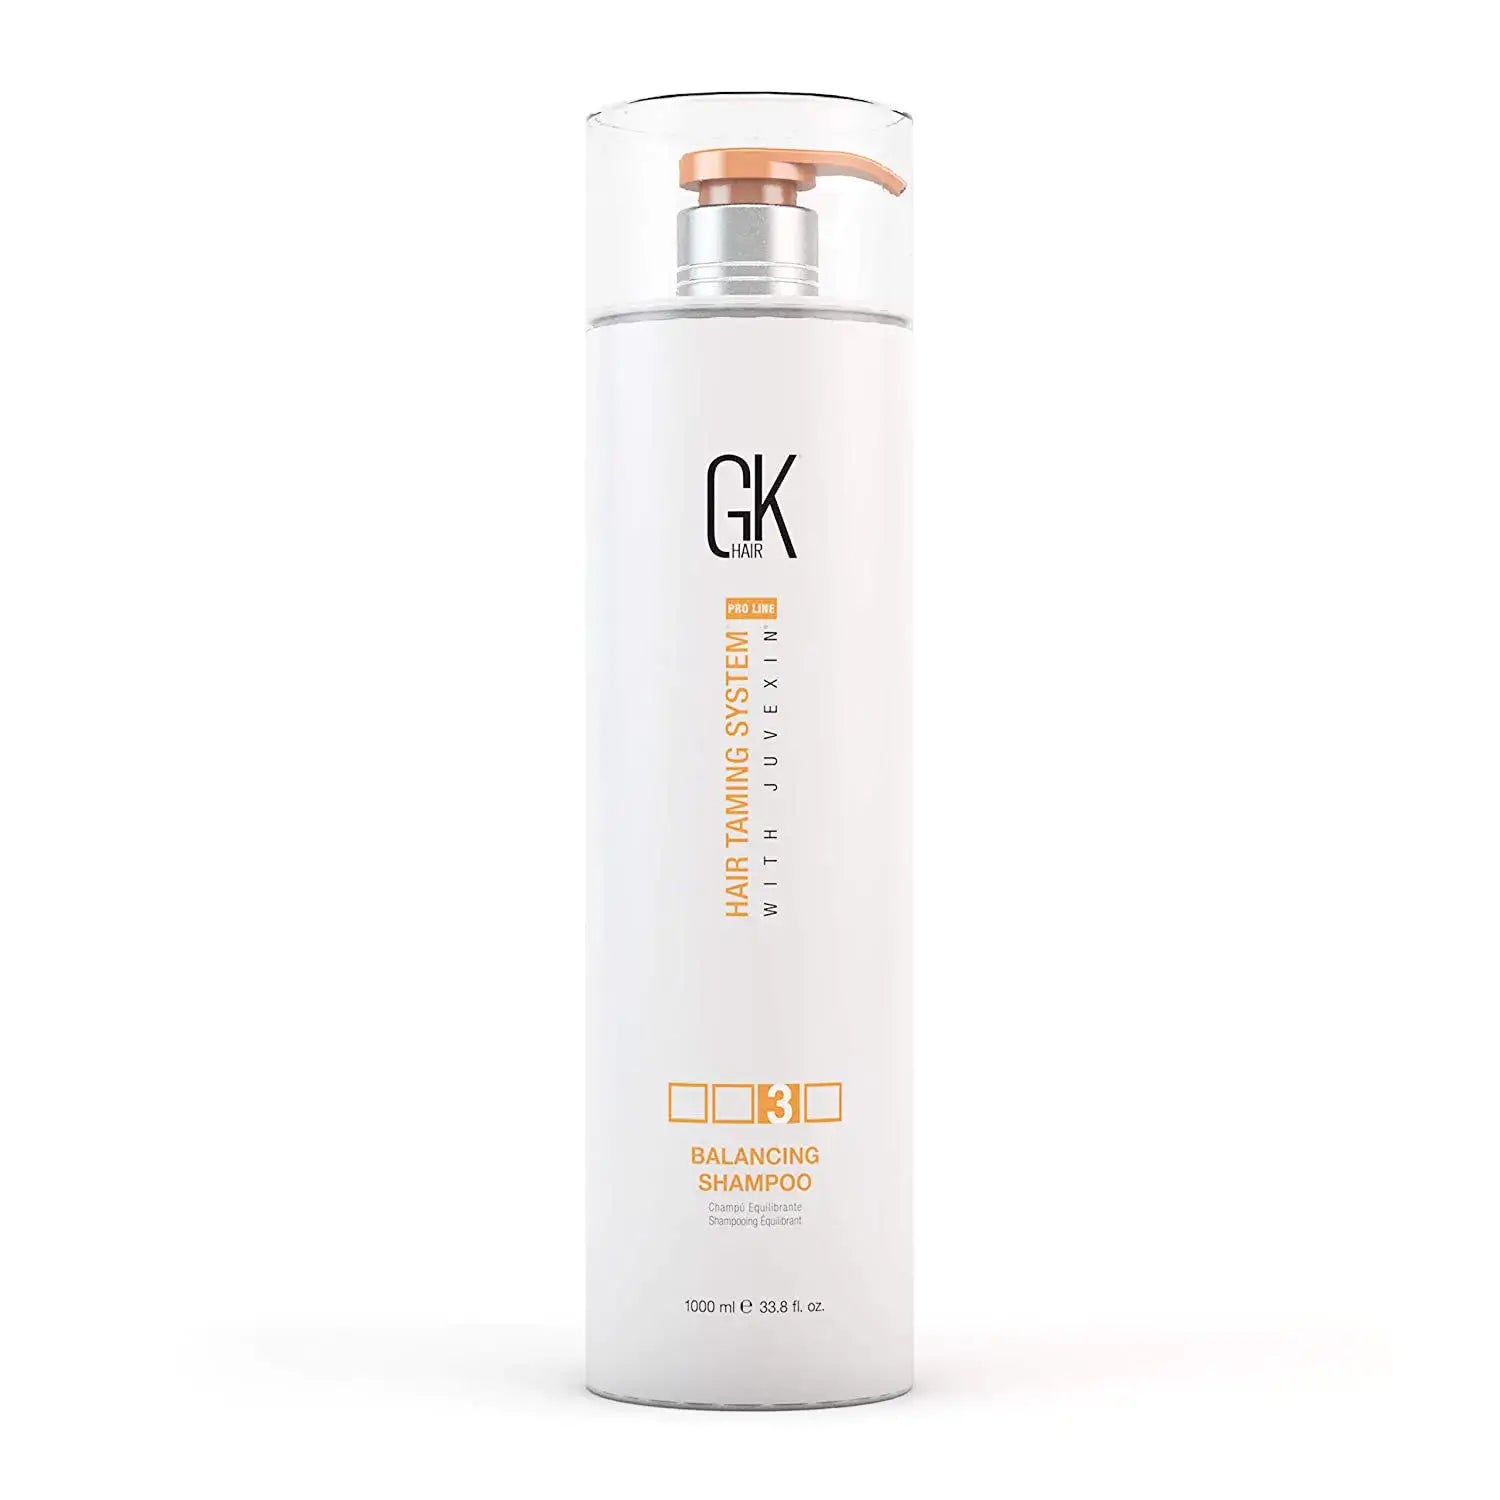 GK Hair Balancing Shampoo 1000 Ml